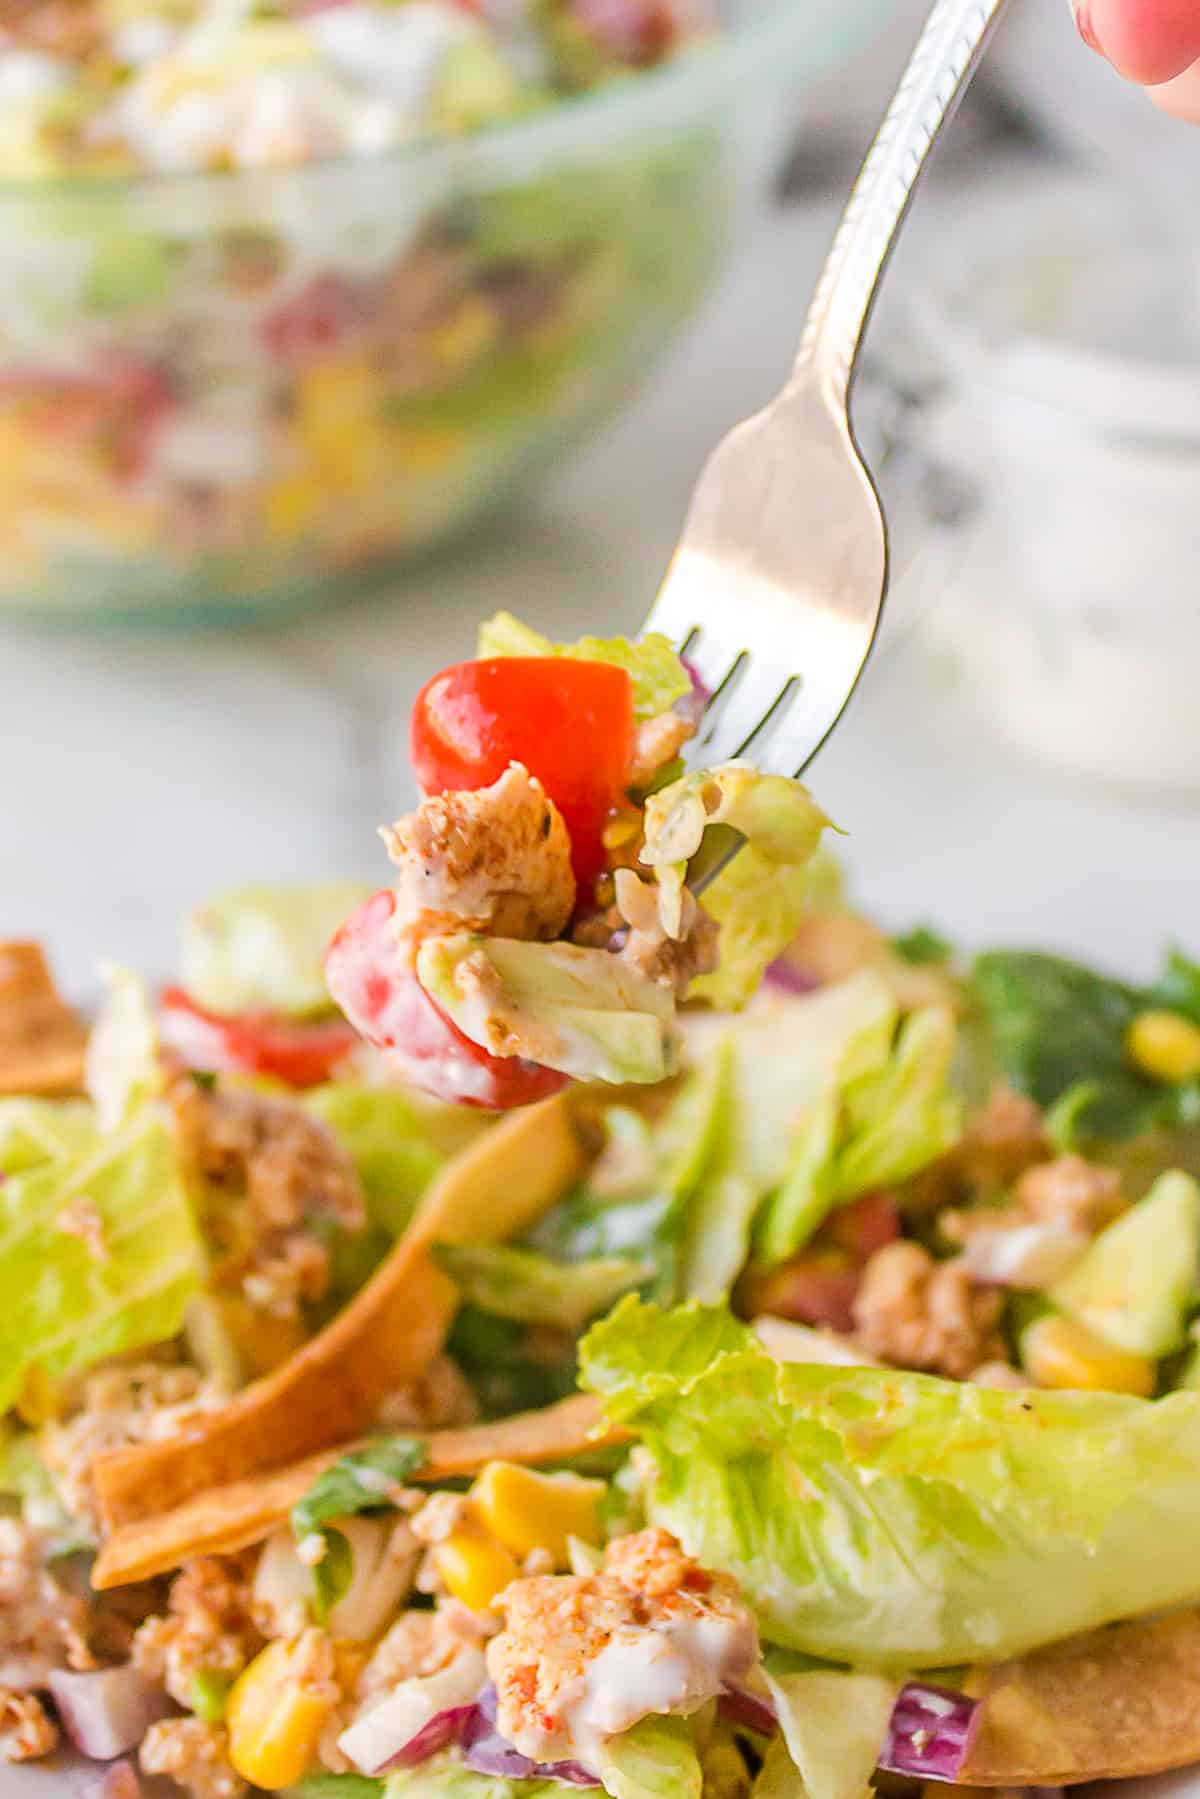 A bite of salad on a fork.